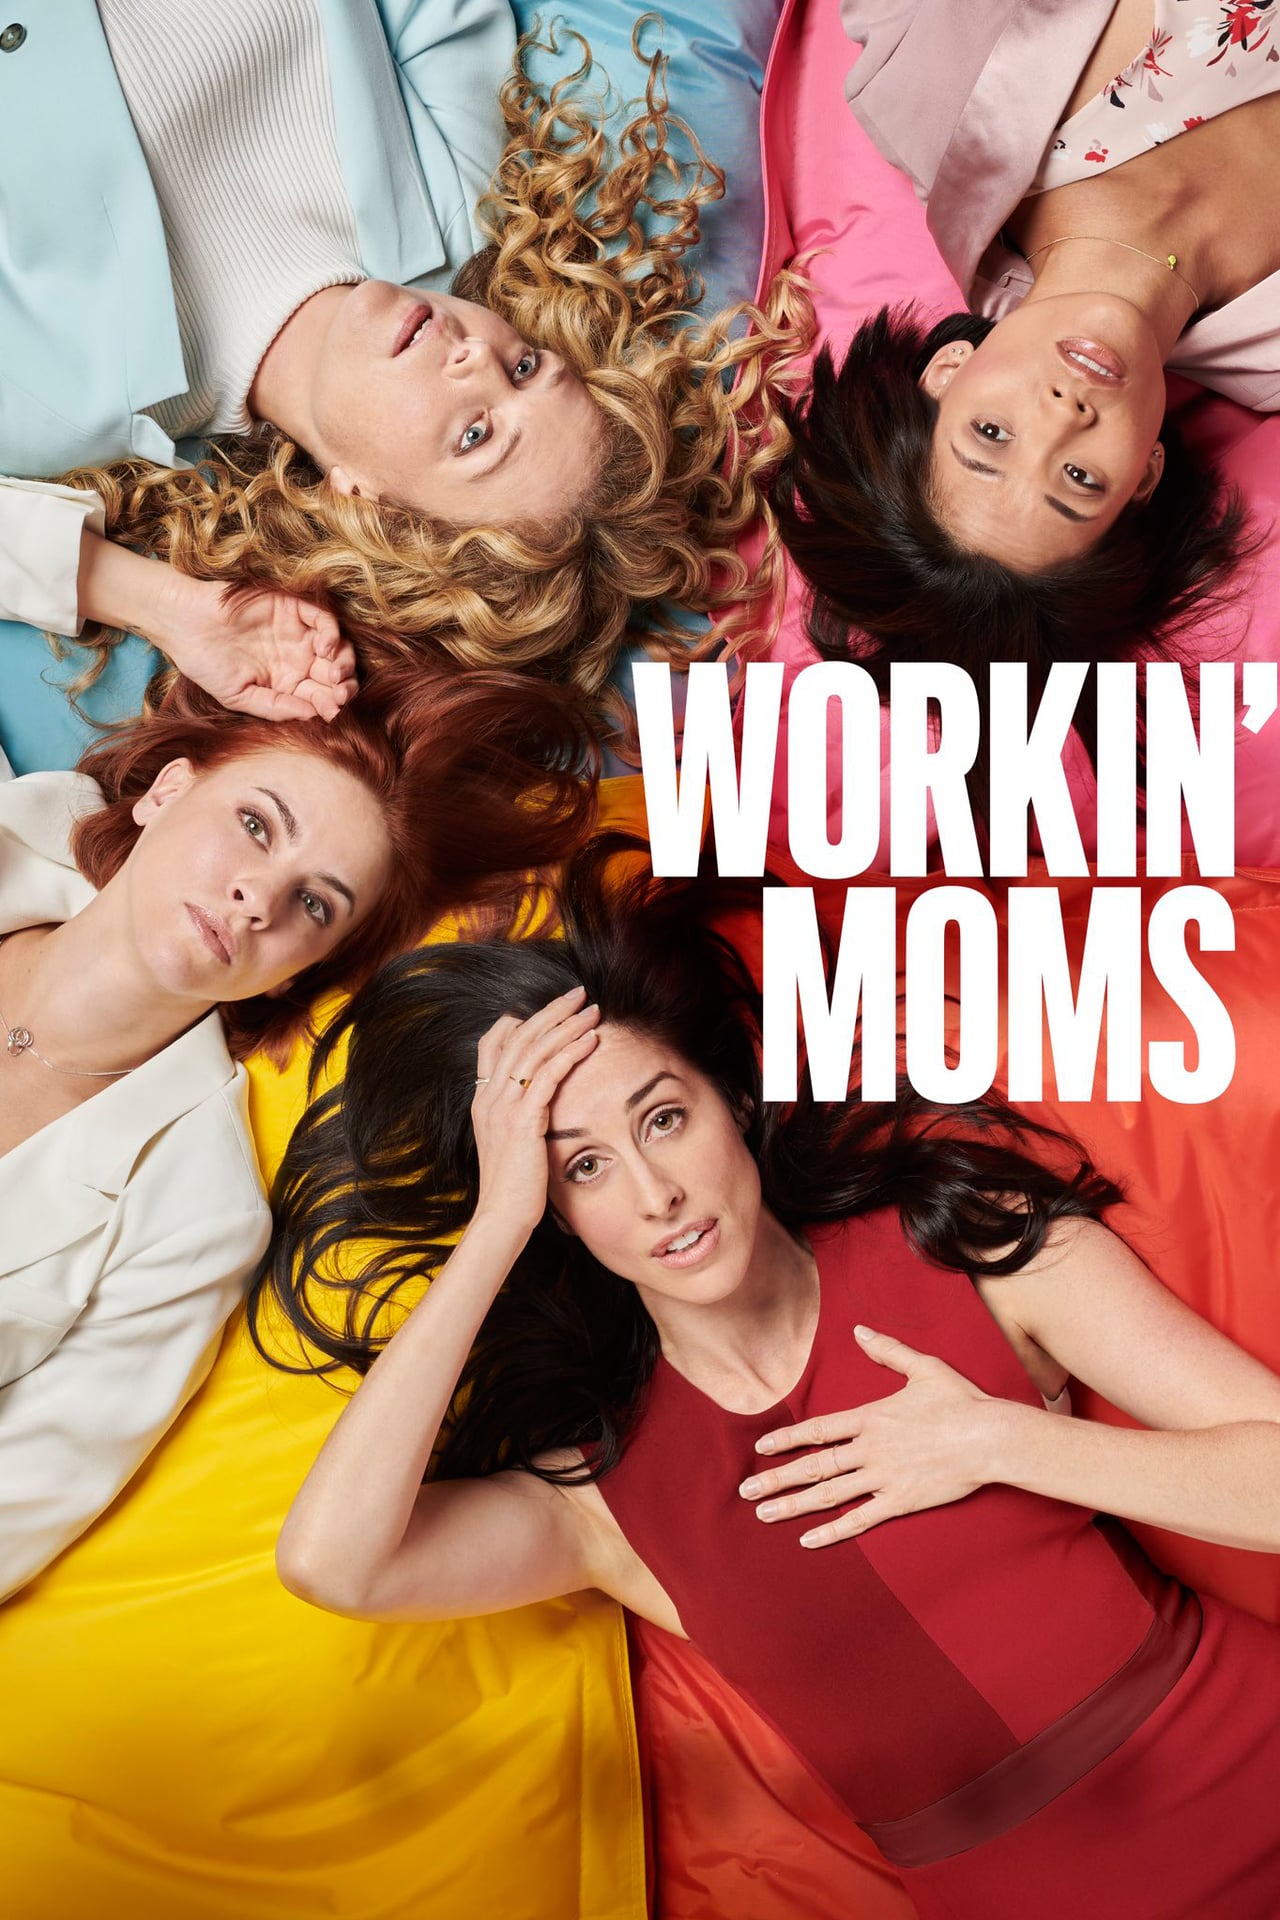 Workin Moms Netflix